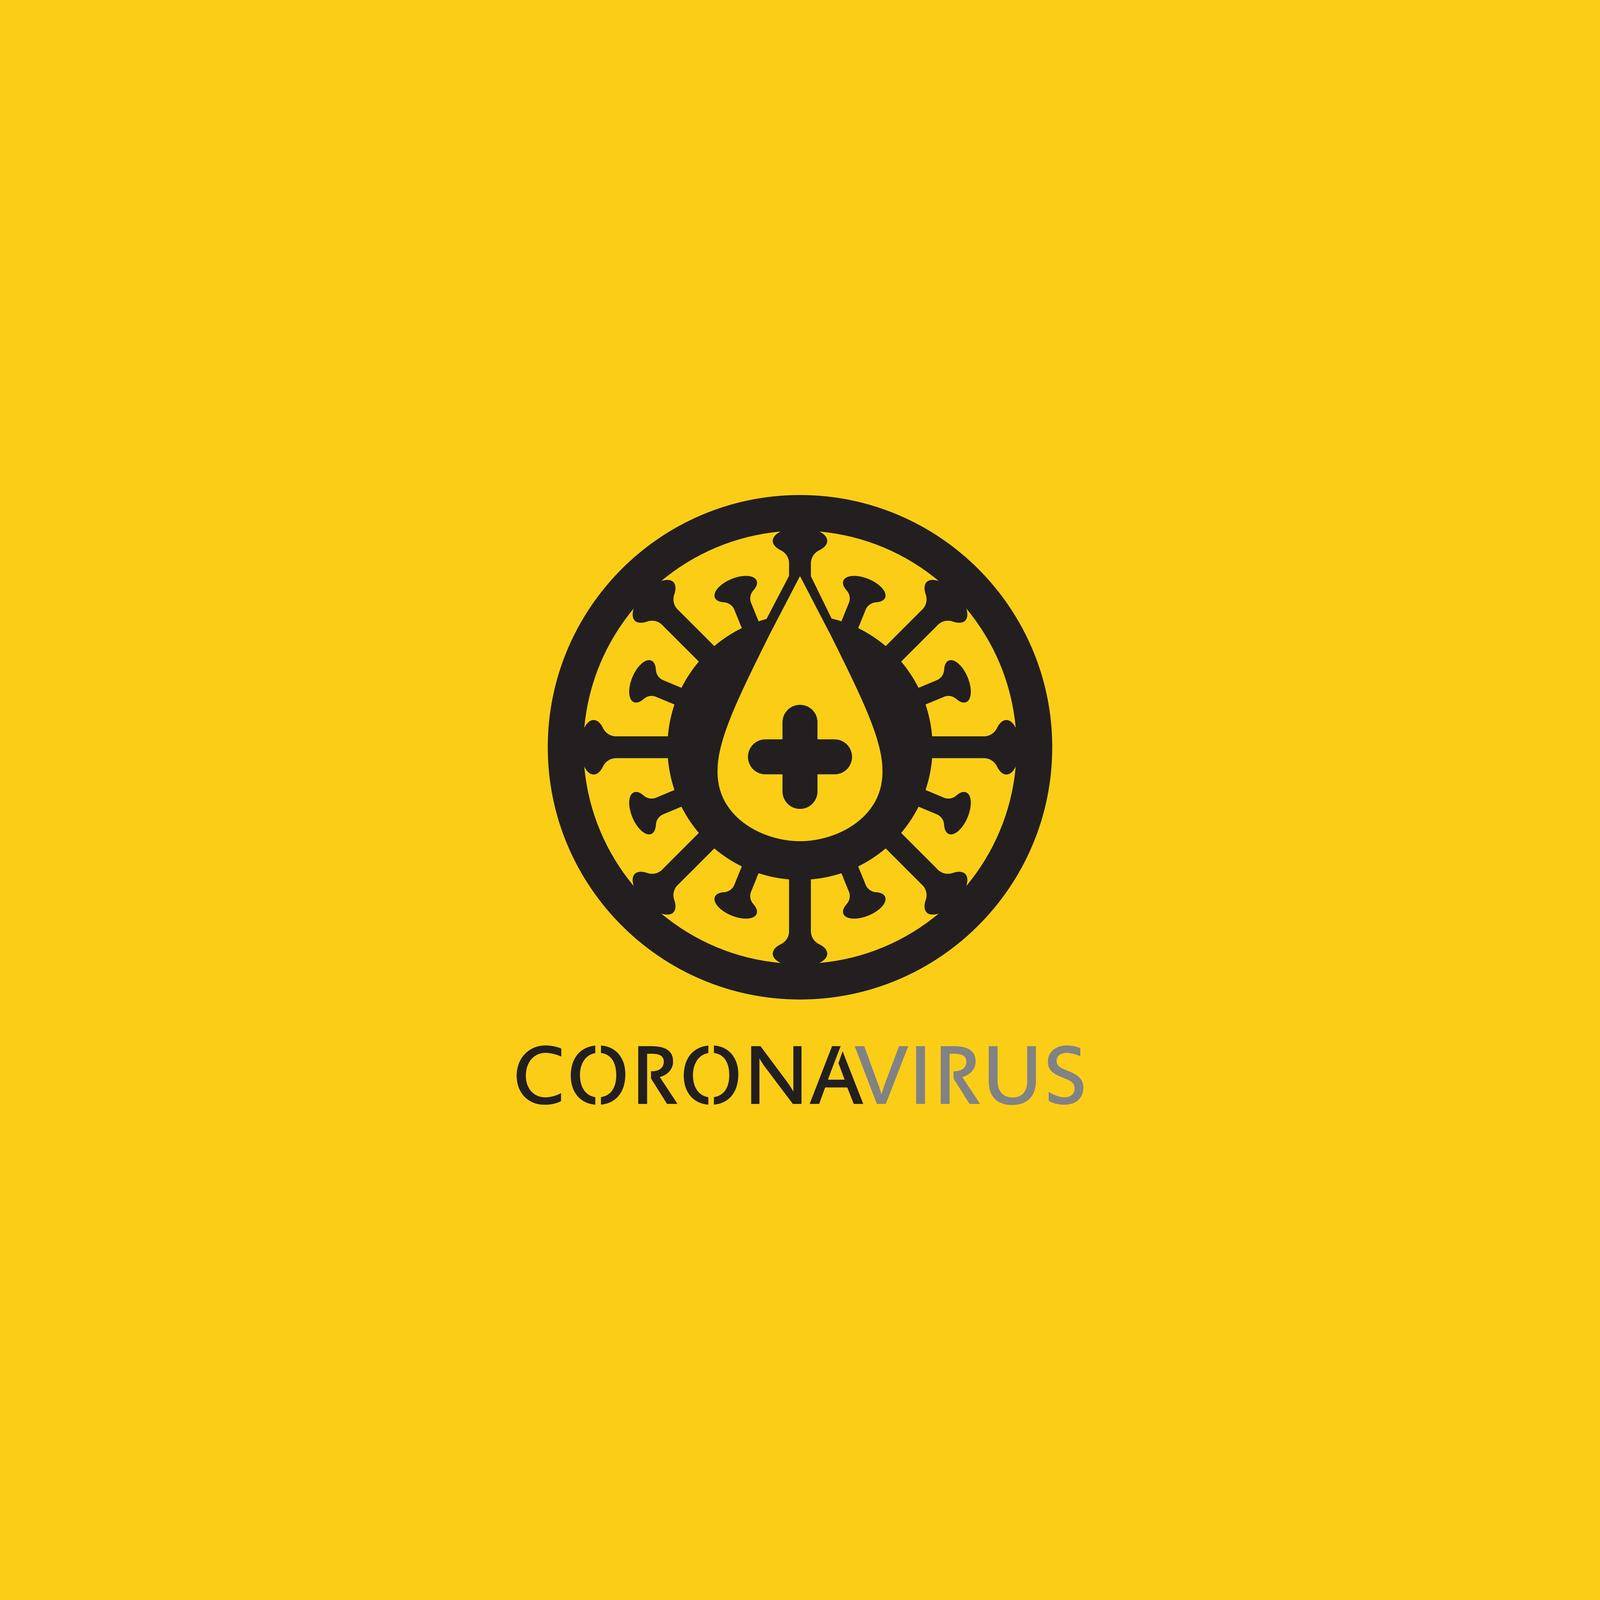 corona virus logo virus vector, vaccin logo,infection bacteria icon and health care danger social distancing pandemic covid 19 by Anggasaputro